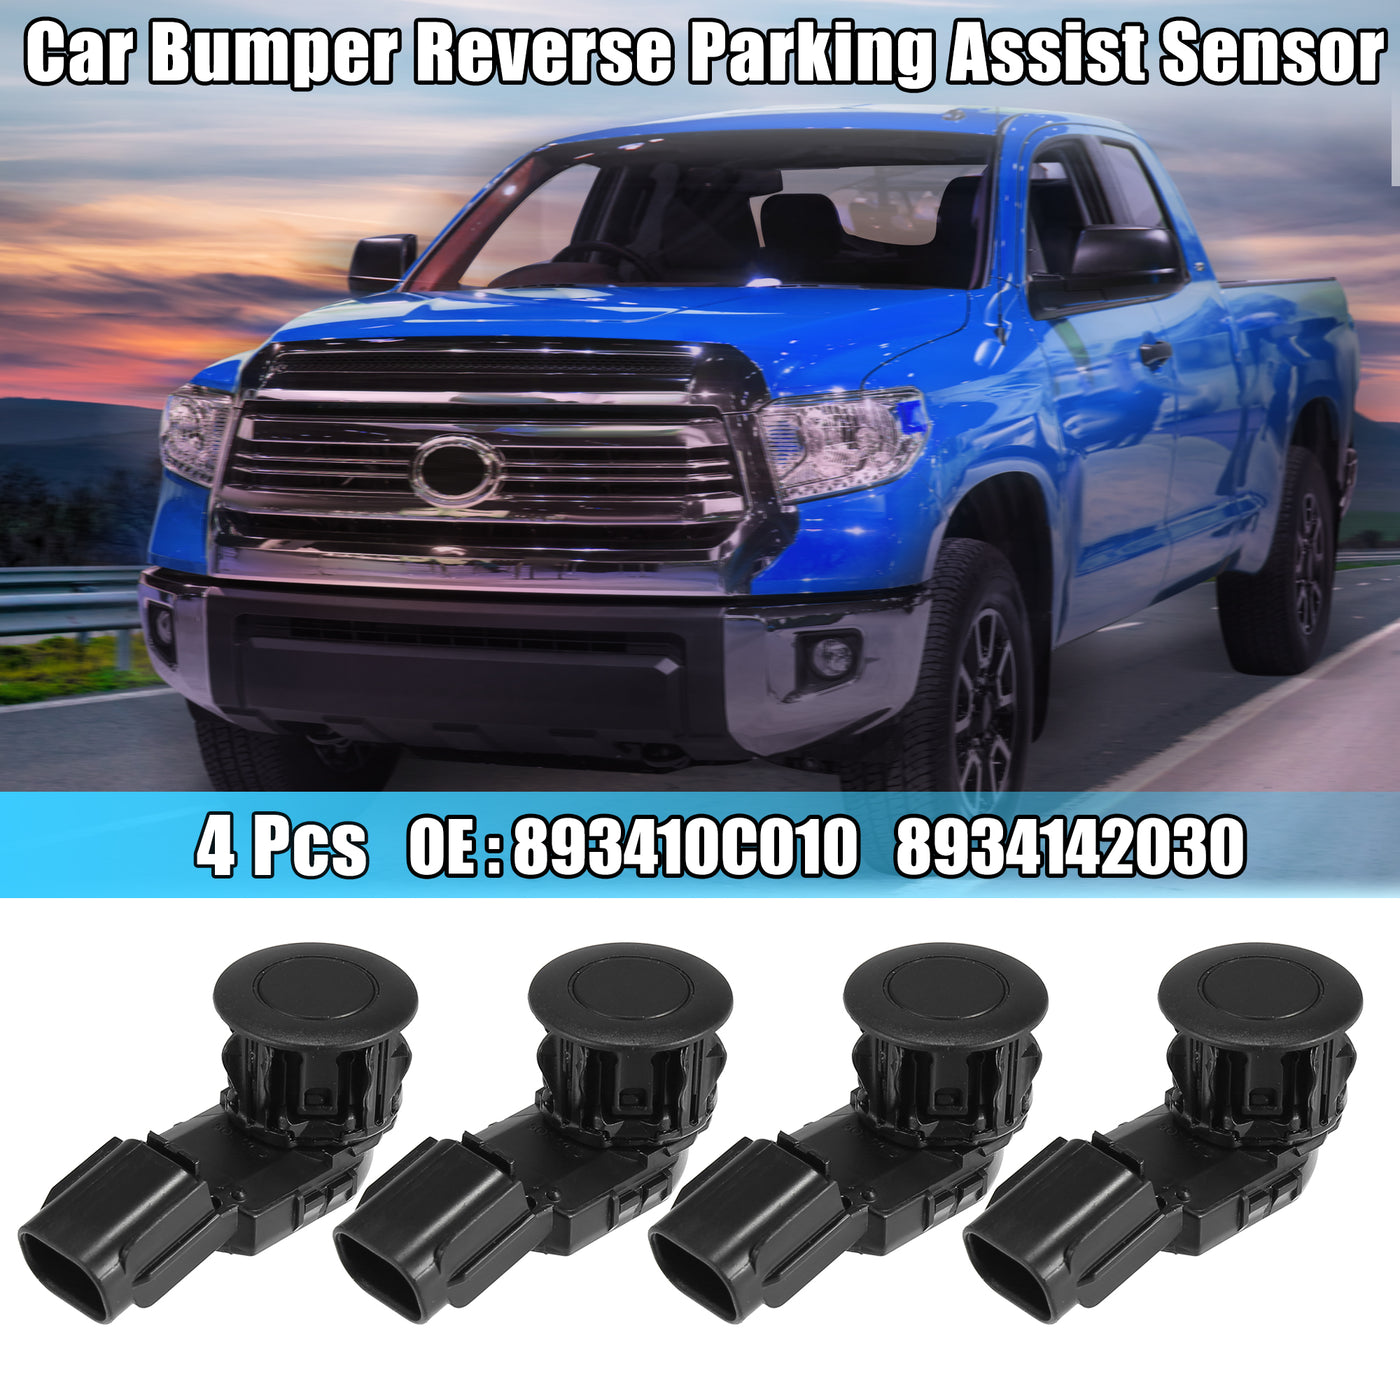 X AUTOHAUX 4 Pcs Car Bumper Reverse Parking Assist Sensor for Toyota RAV4 2016-2018 for Toyota Tundra 2014-2018 893410C010 8934142030 893410C011